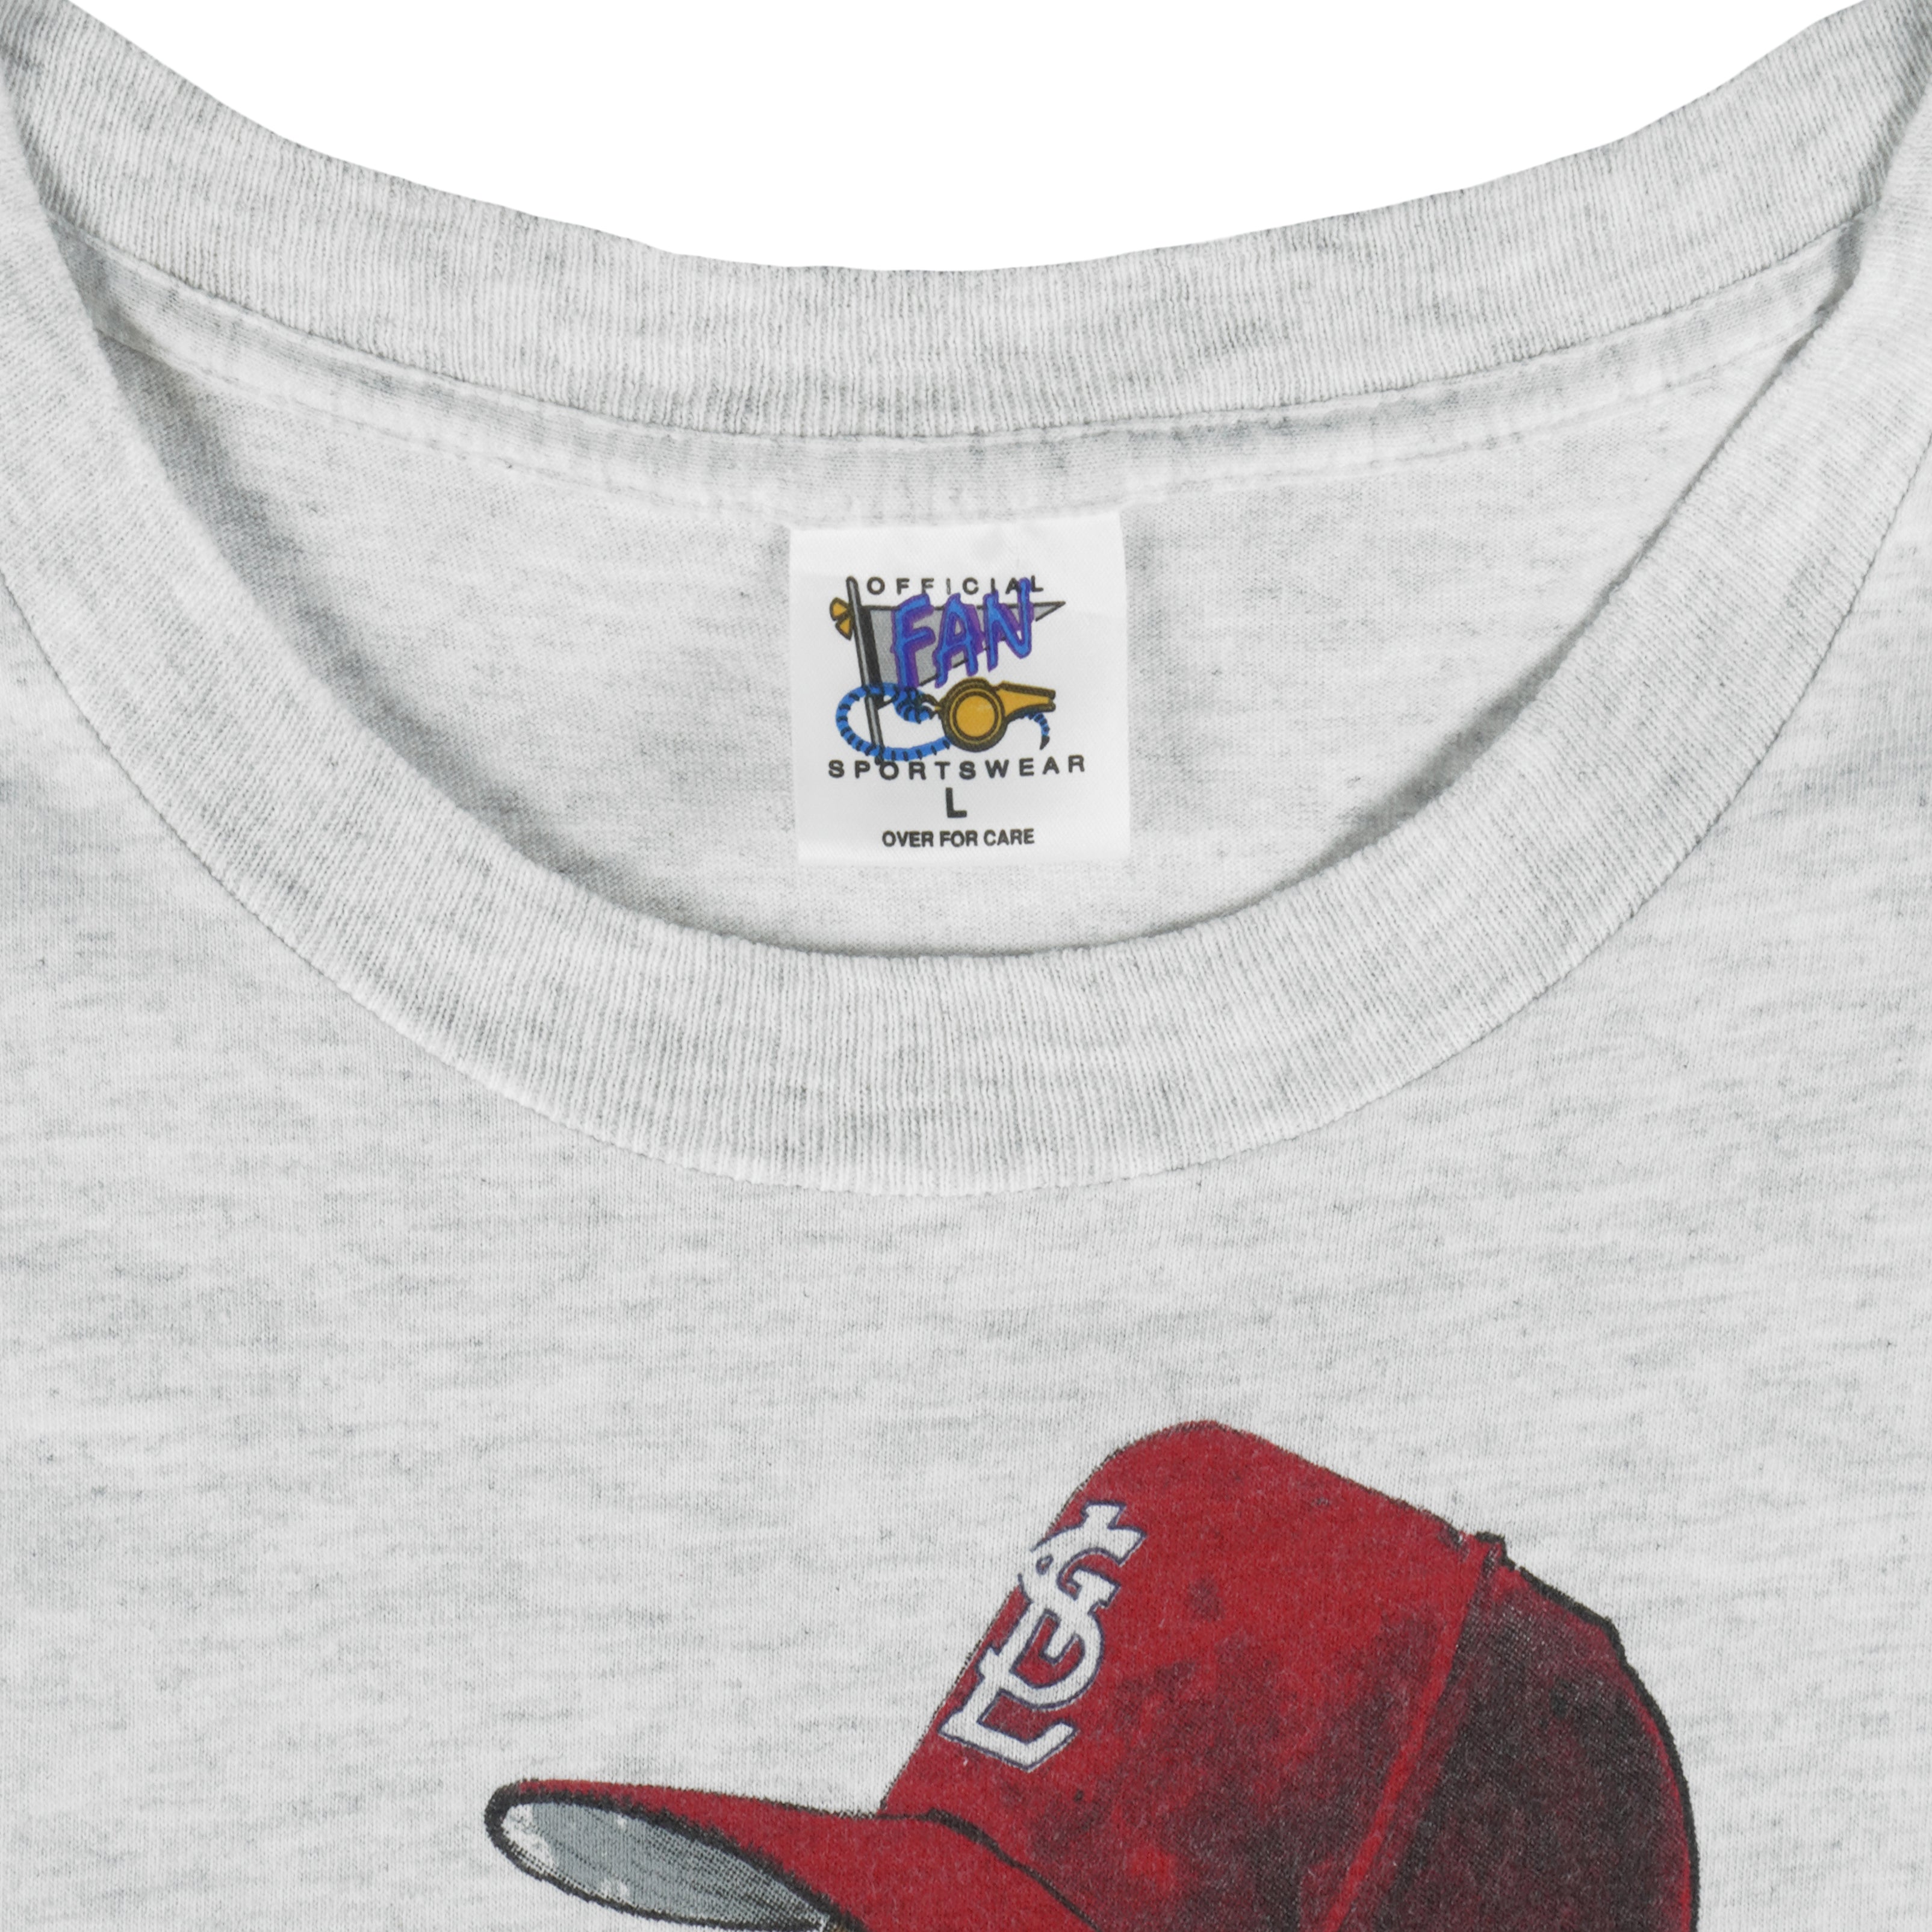 Vintage St Louis Missouri Cardinals Baseball Starter Jacket 